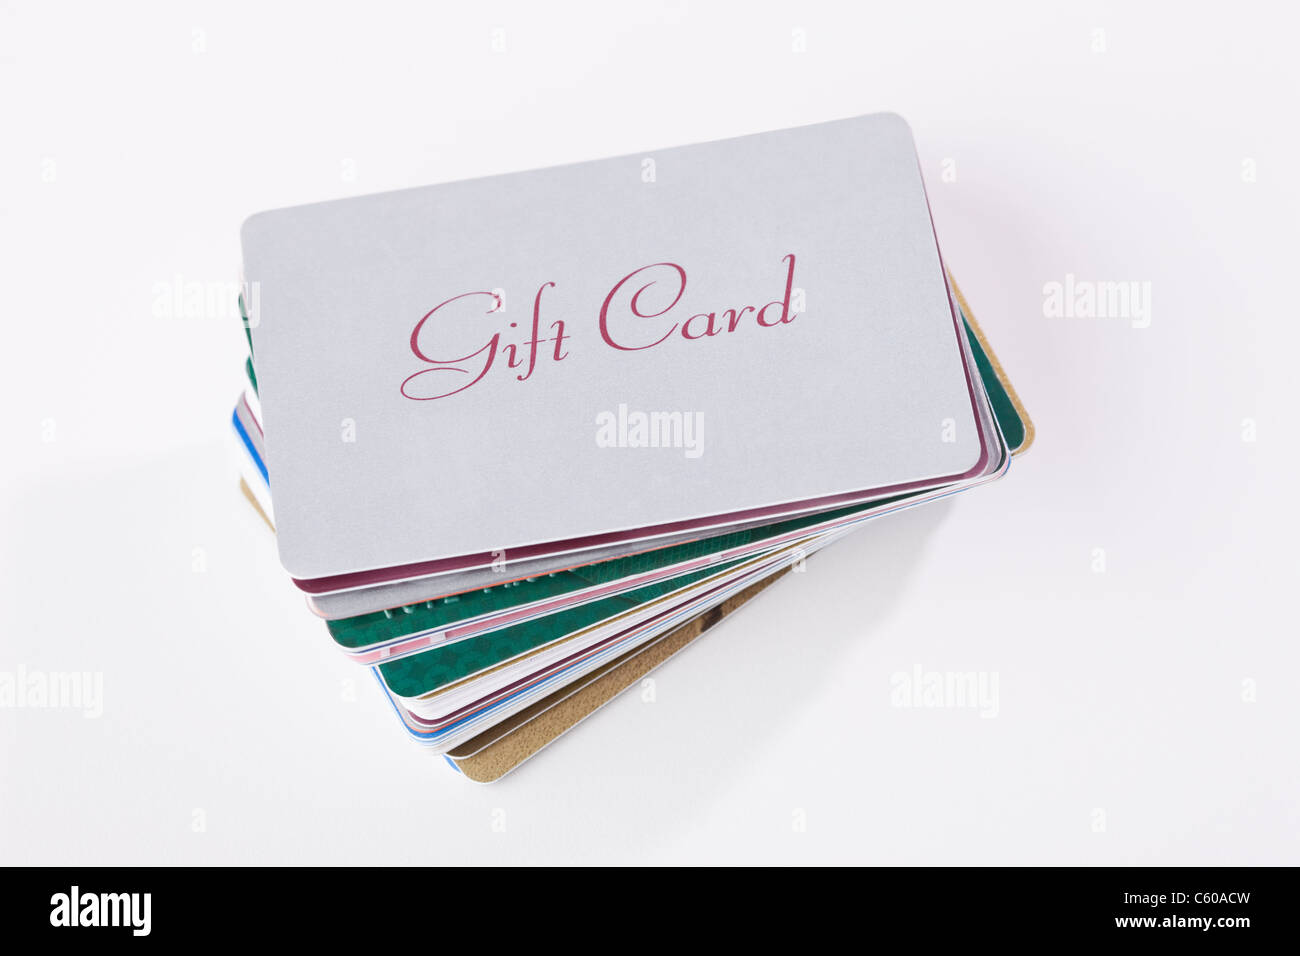 USA, Illinois, Metamora, Stack of gift cards Stock Photo